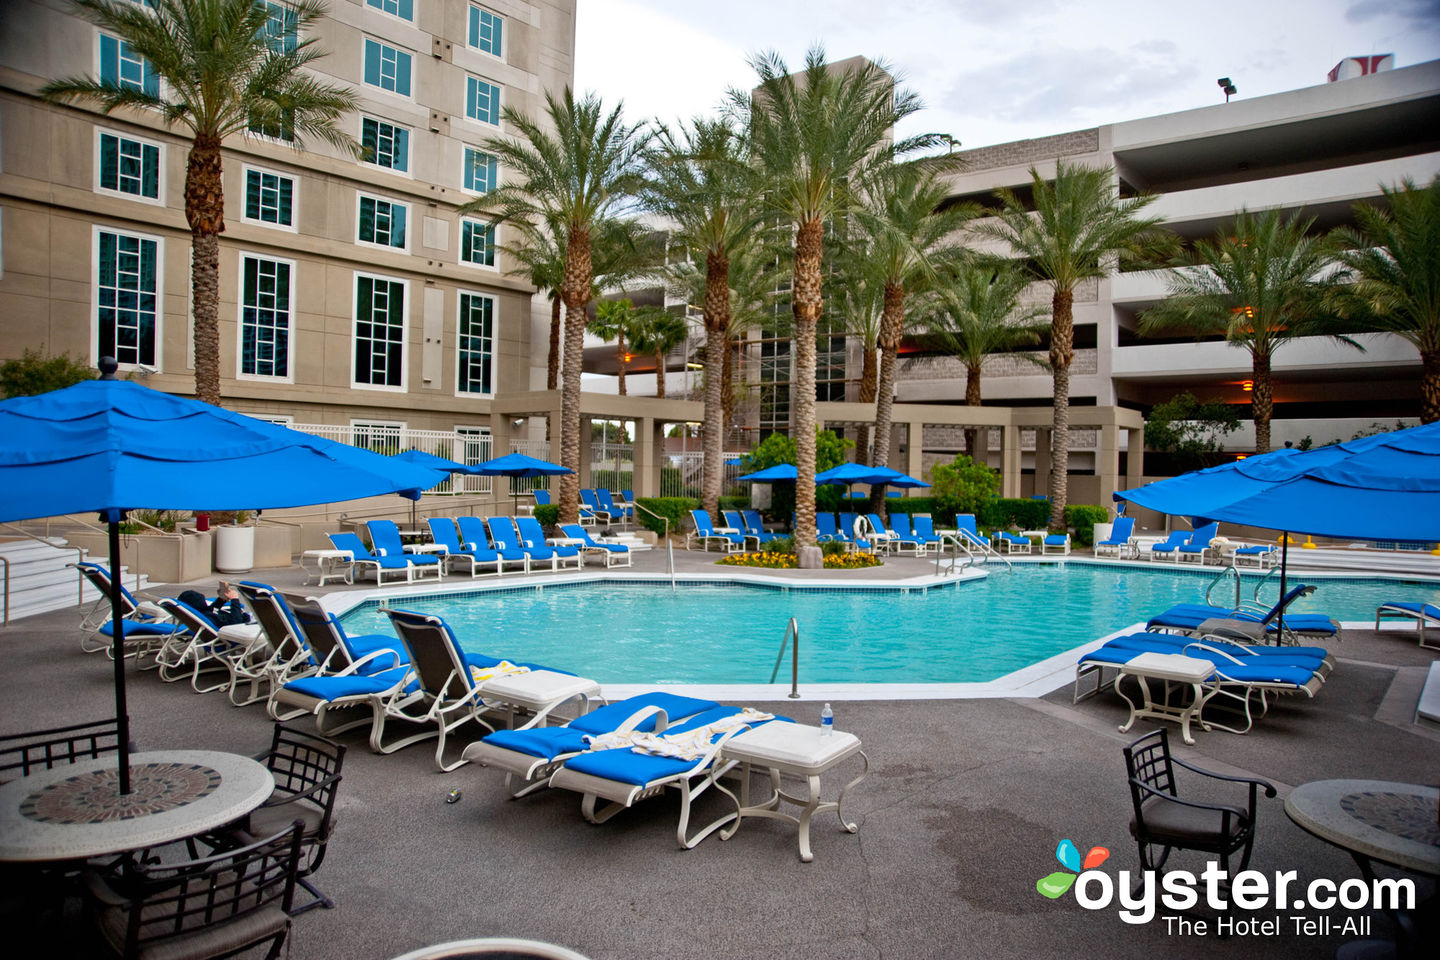 Lounge Chairs Heated Pool Hilton Grand Vacation Club At The Las Vegas Hilton V137316 1440 